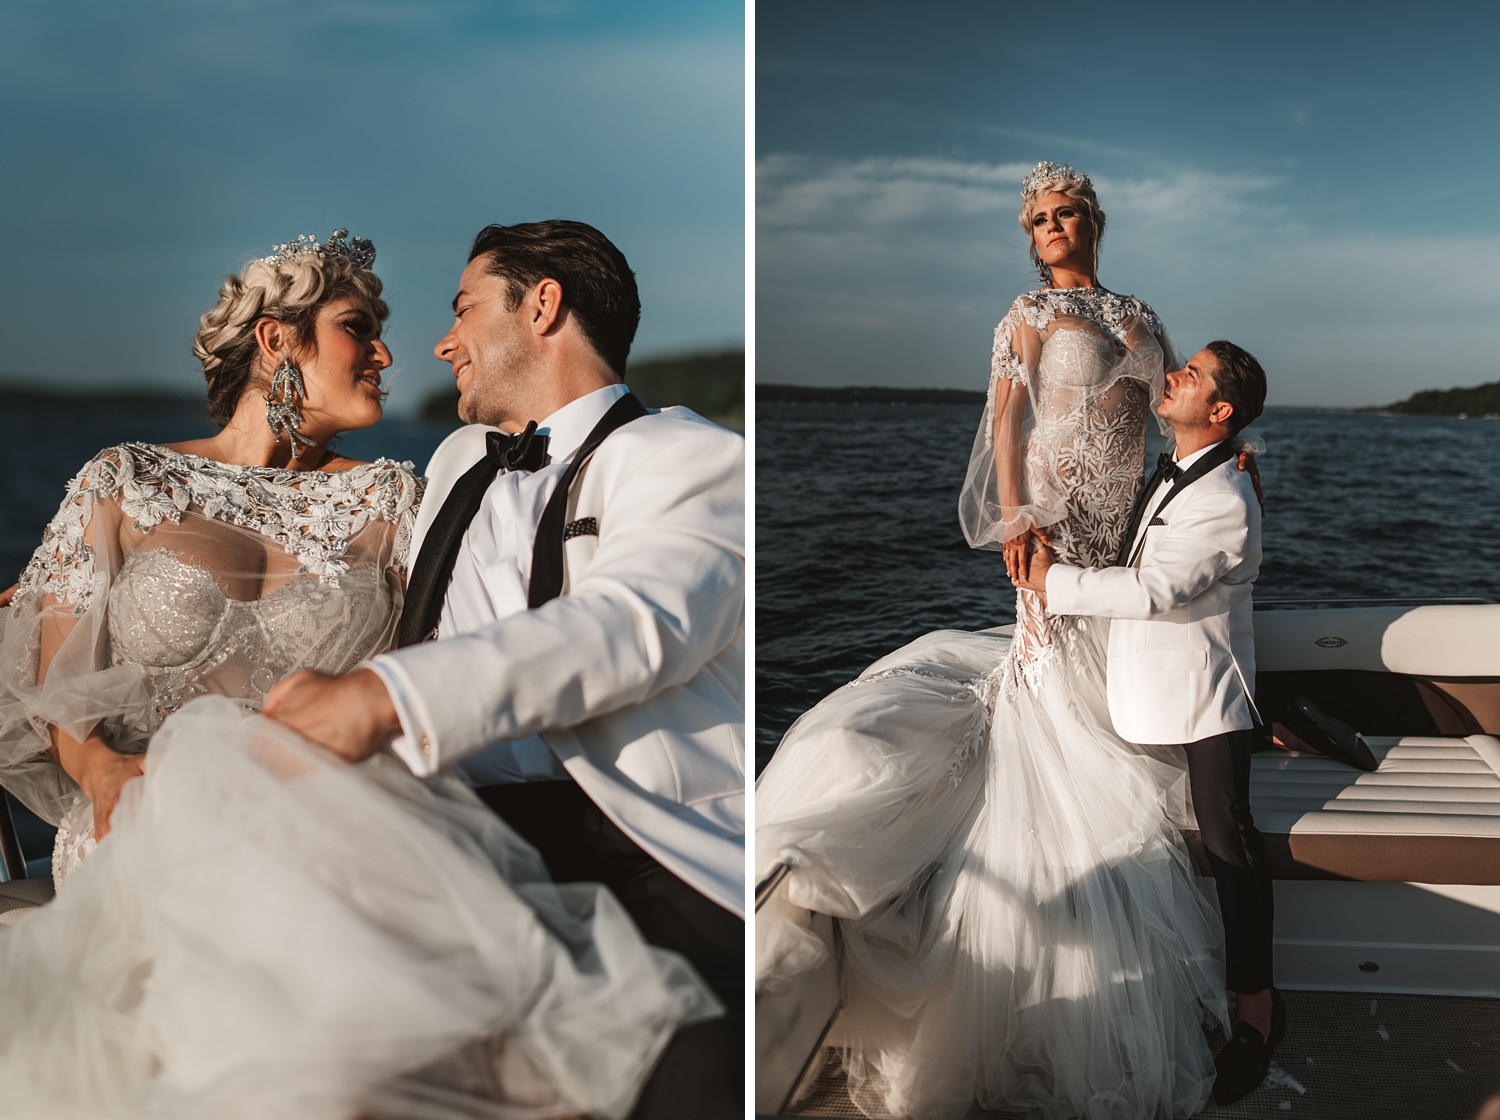 Lake Geneva Micro Wedding - The Adamkovi bride and groom photos on a boat